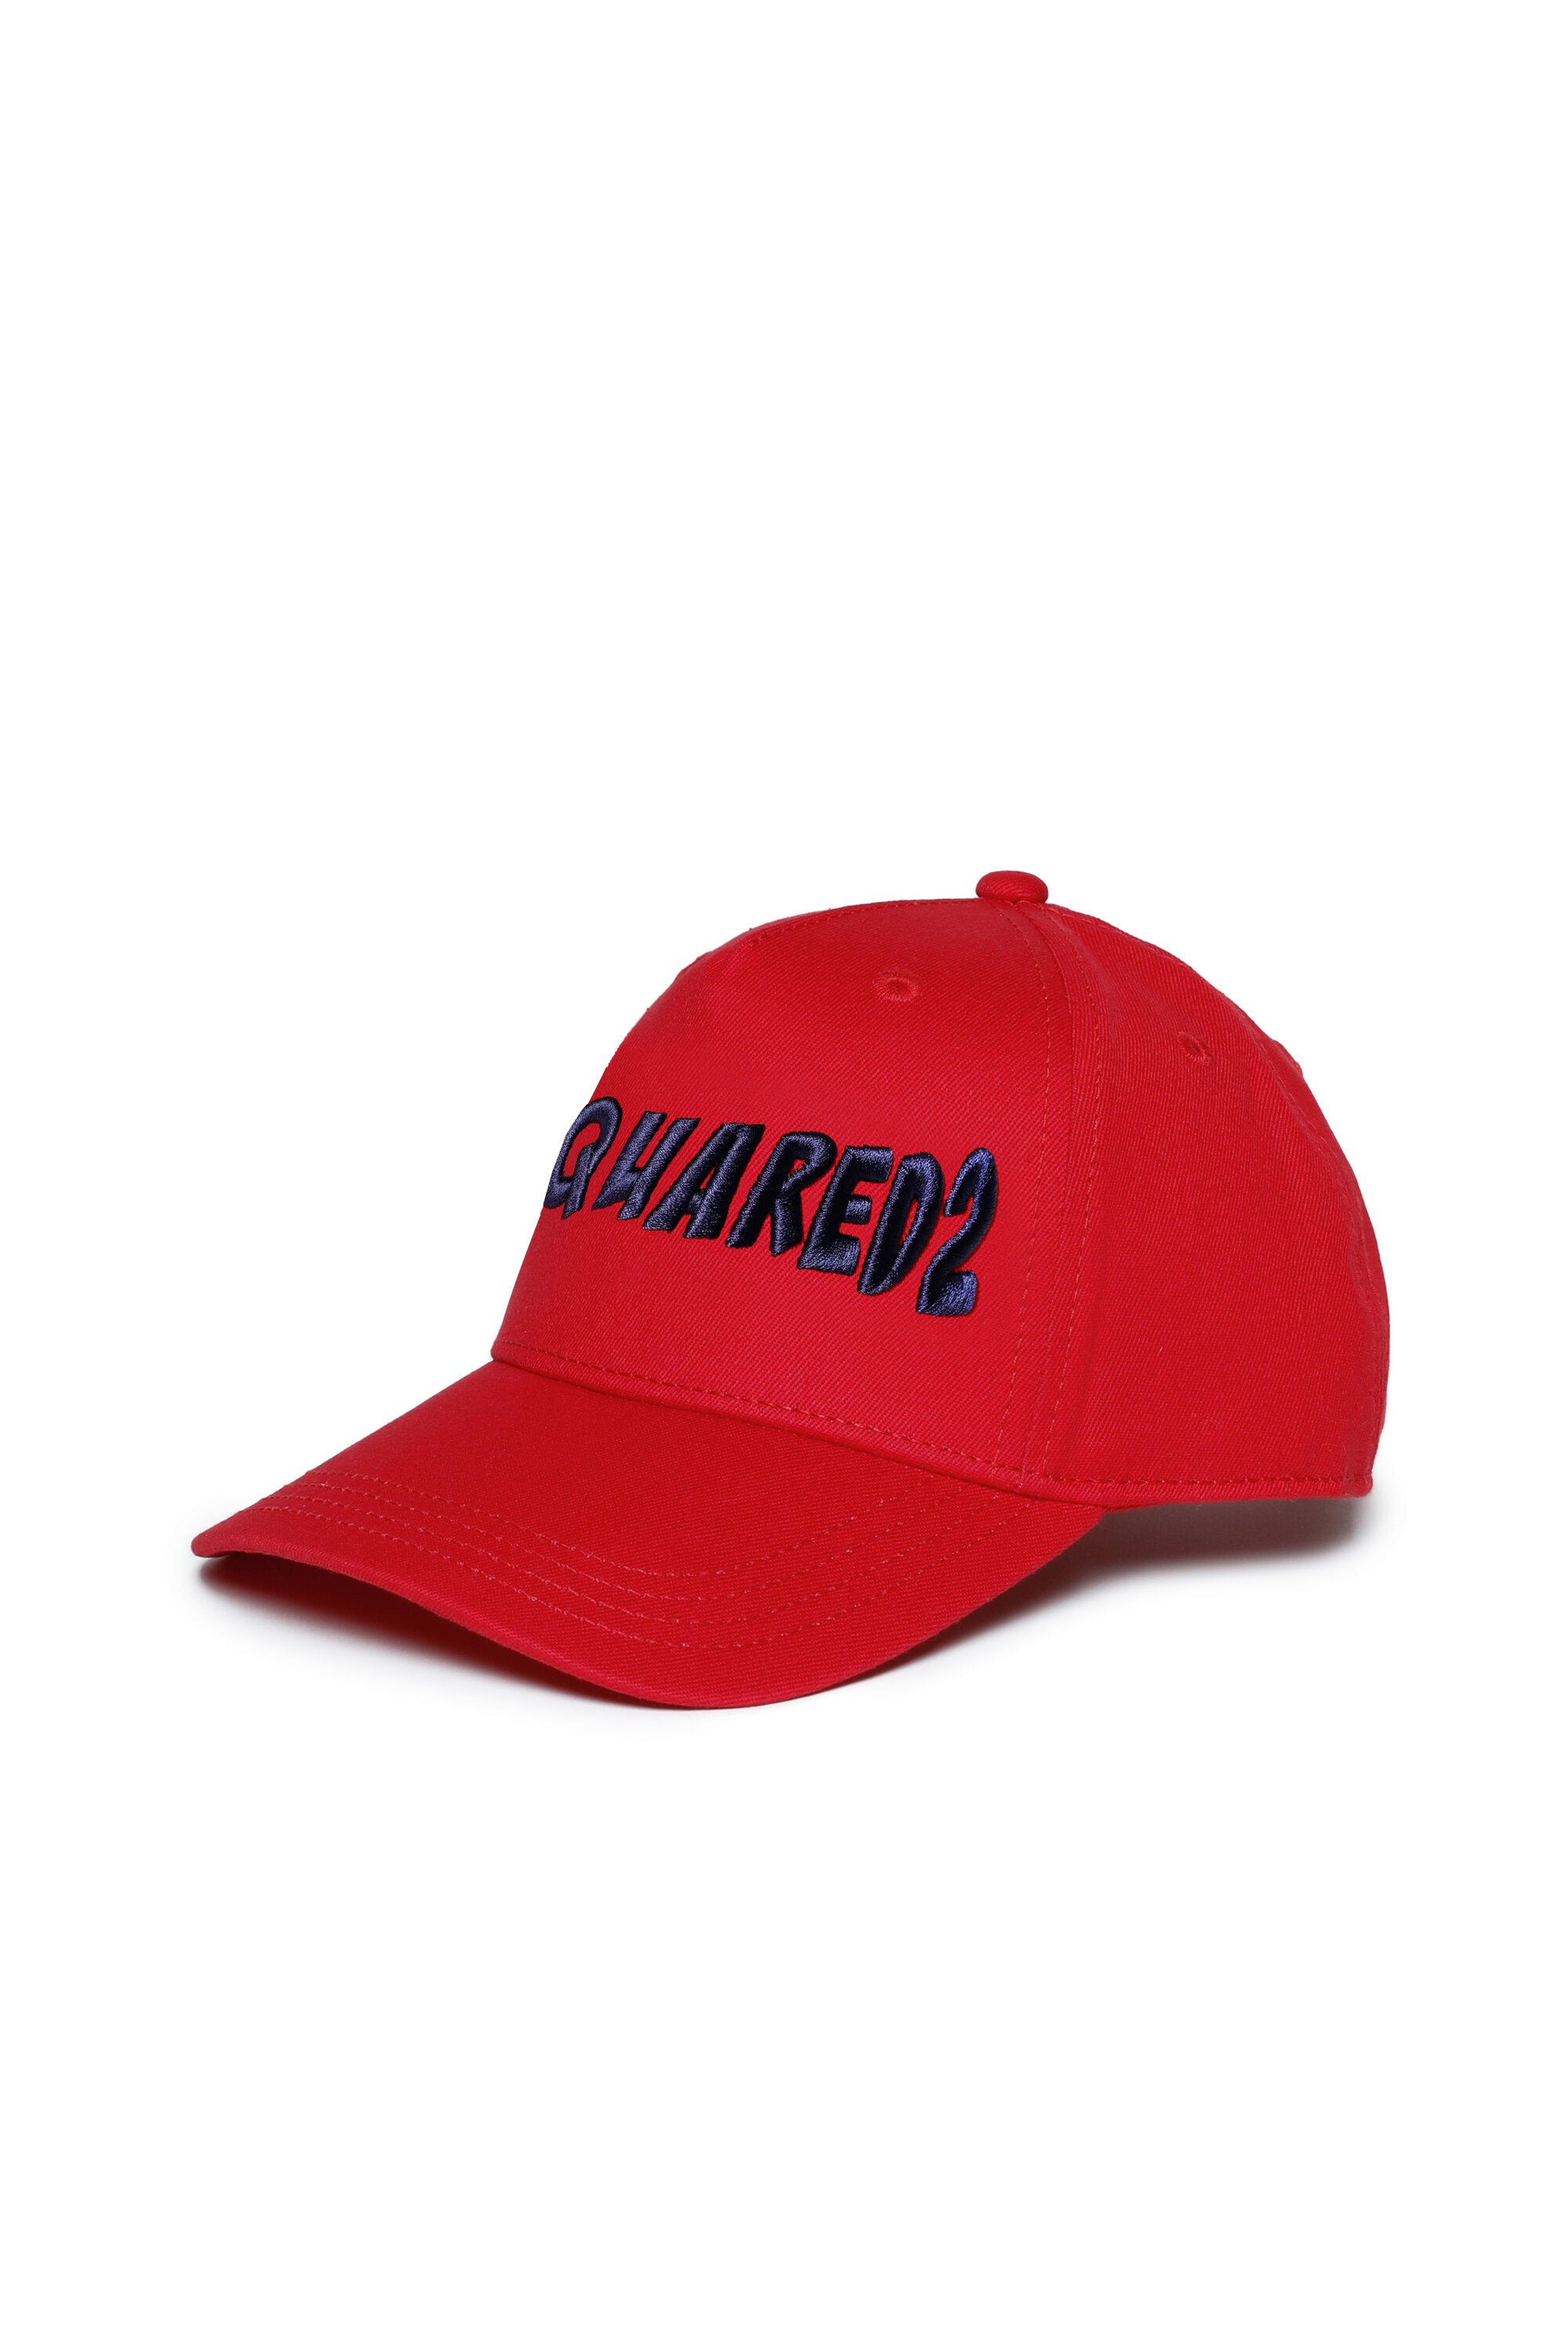 Gabardine baseball cap with wrooom logo